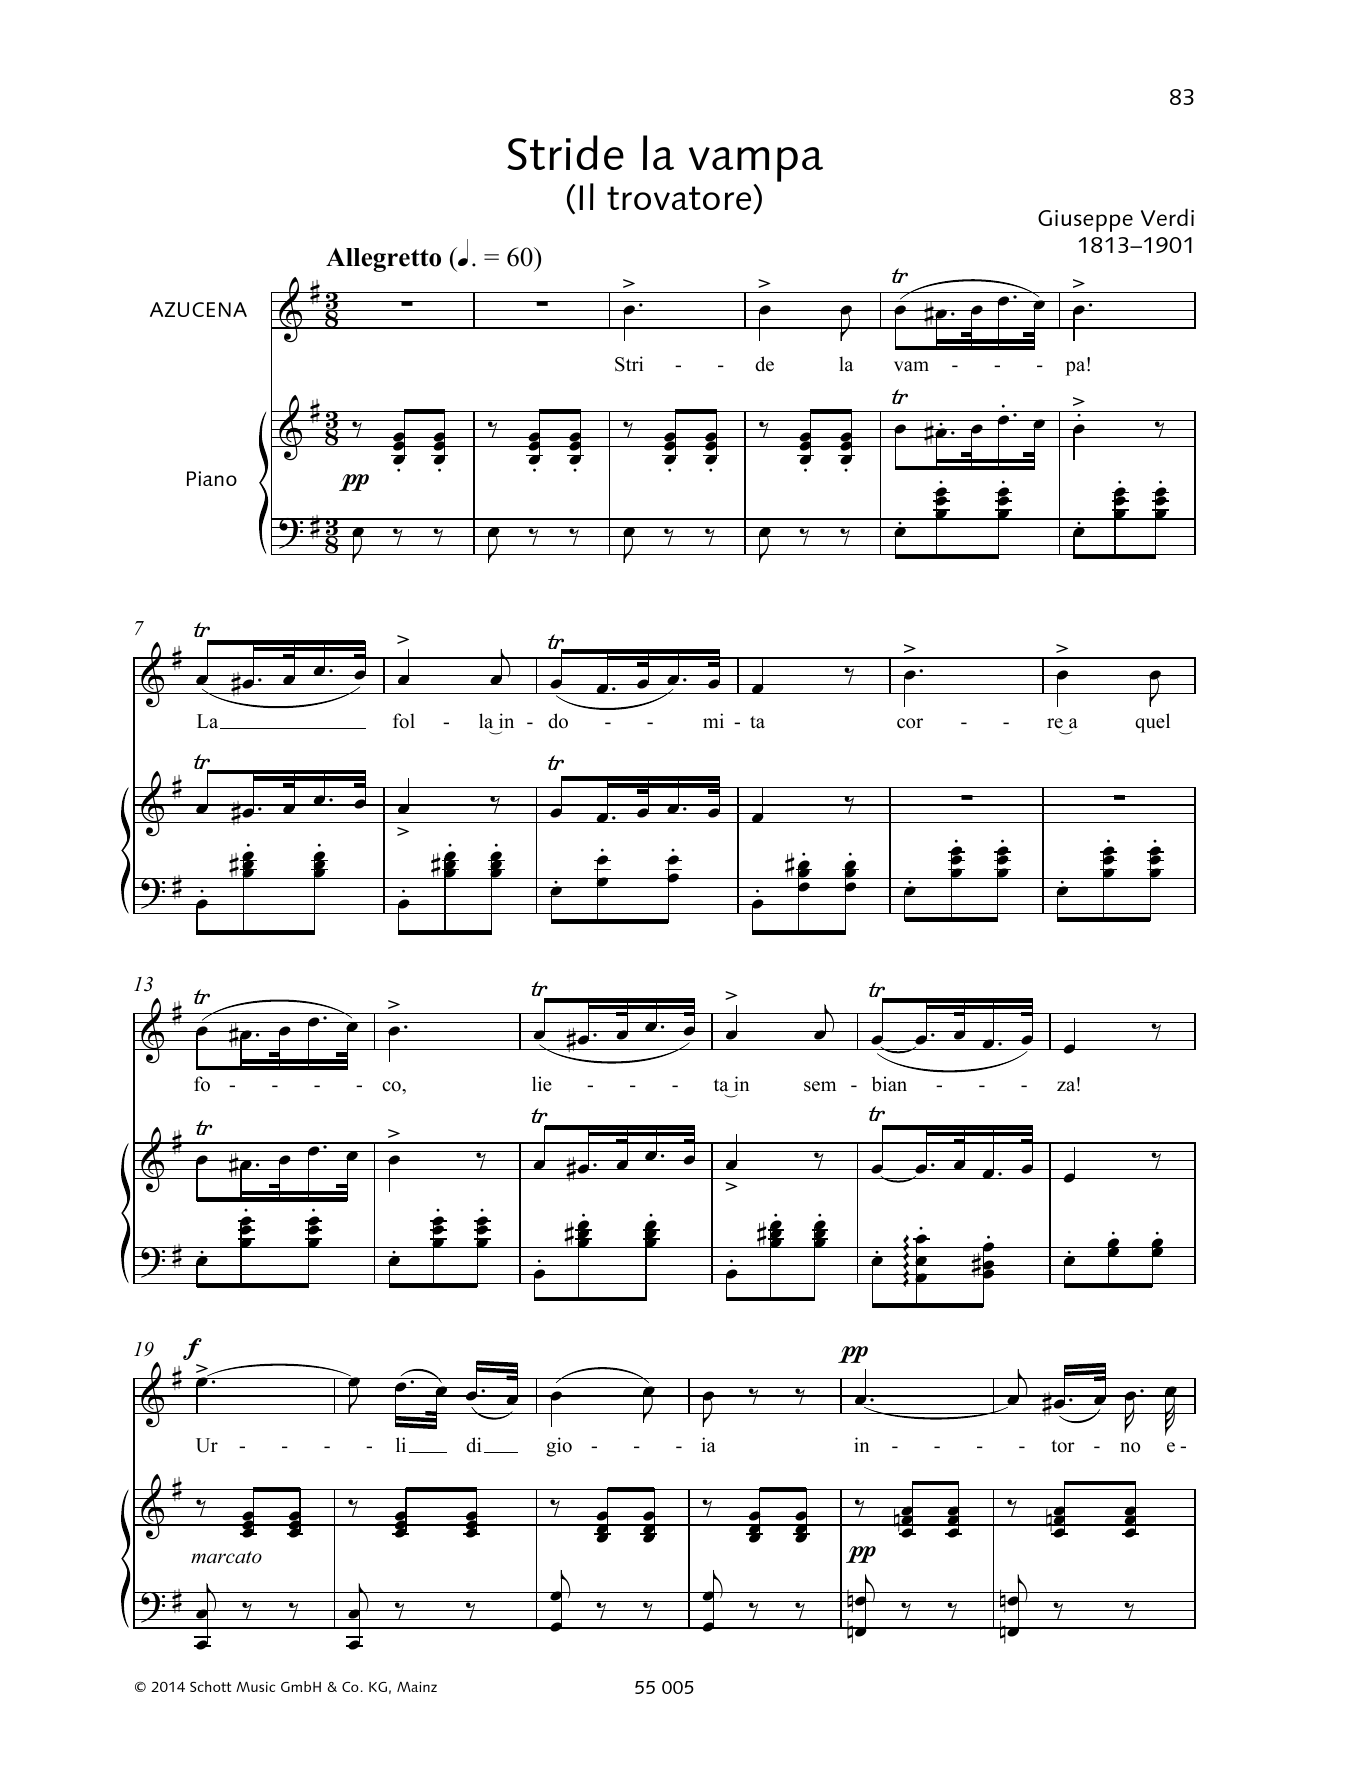 Giuseppe Verdi Stride La Vampa Sheet Music Notes & Chords for Piano Solo - Download or Print PDF